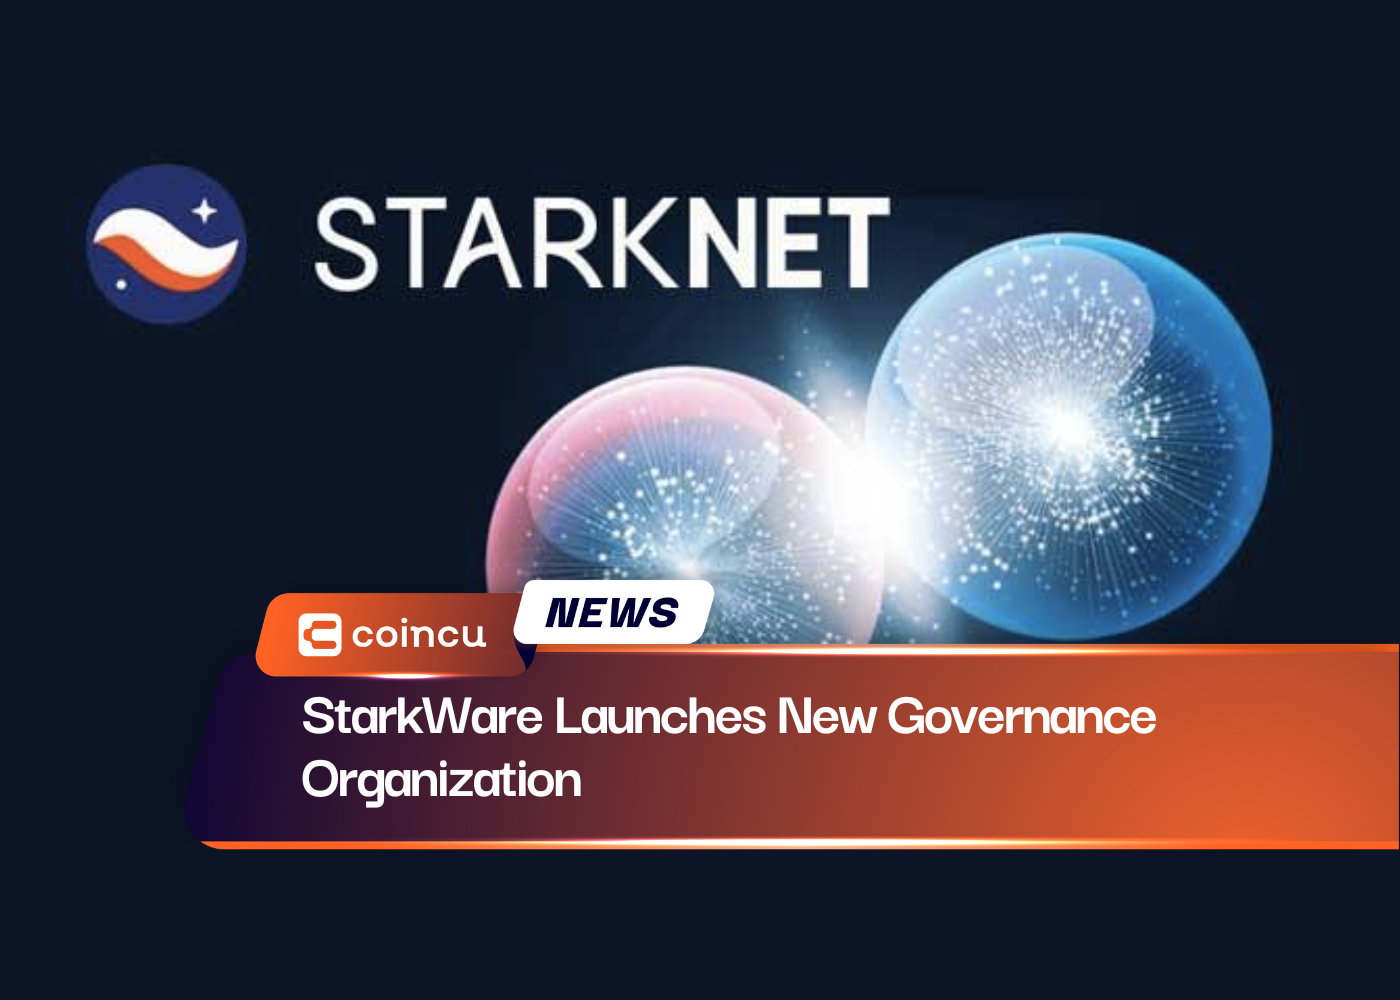 StarkWare Launches New Governance Organization